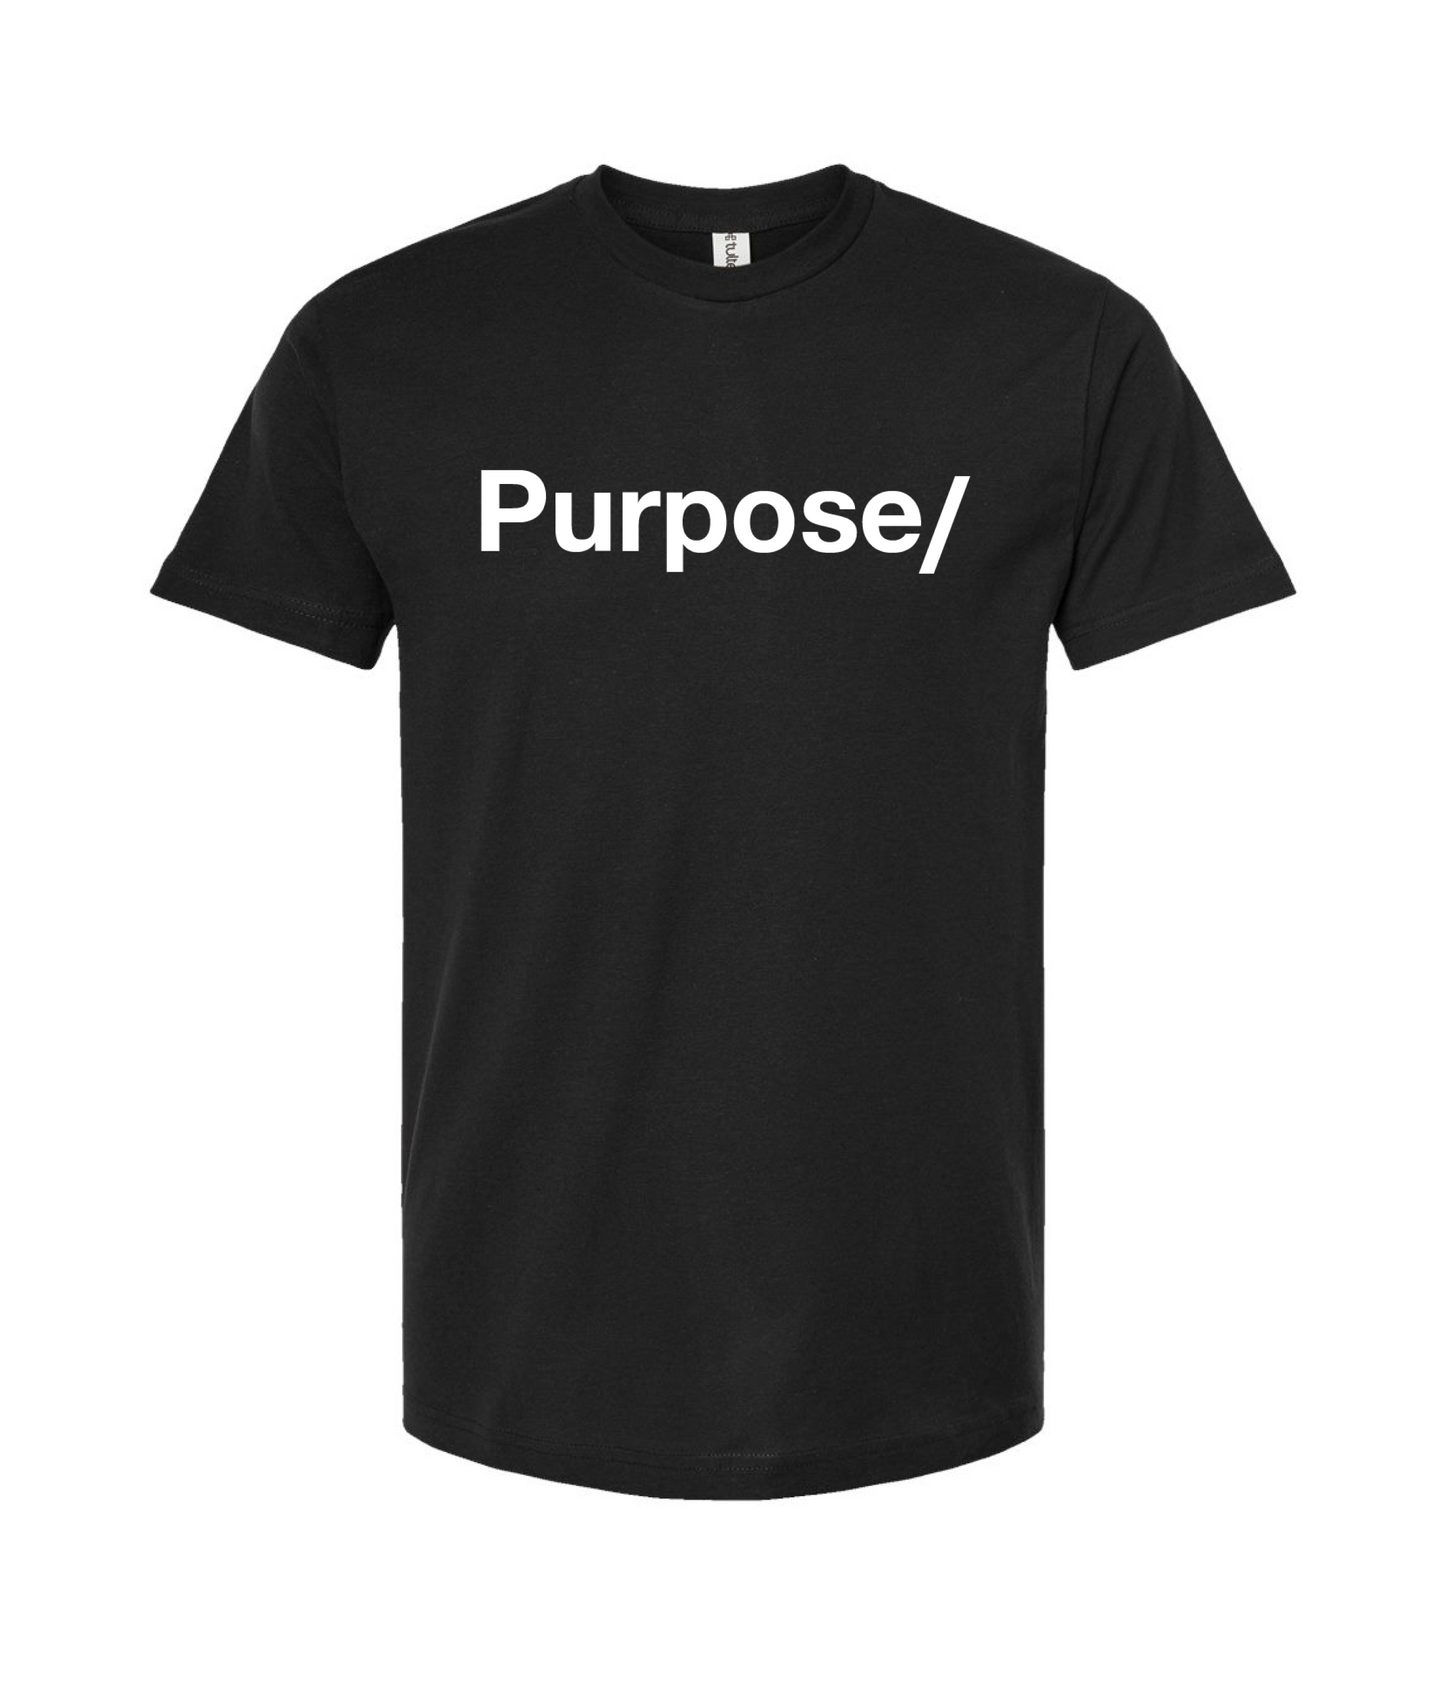 Purpose/ - Purpose/ - Black T Shirt